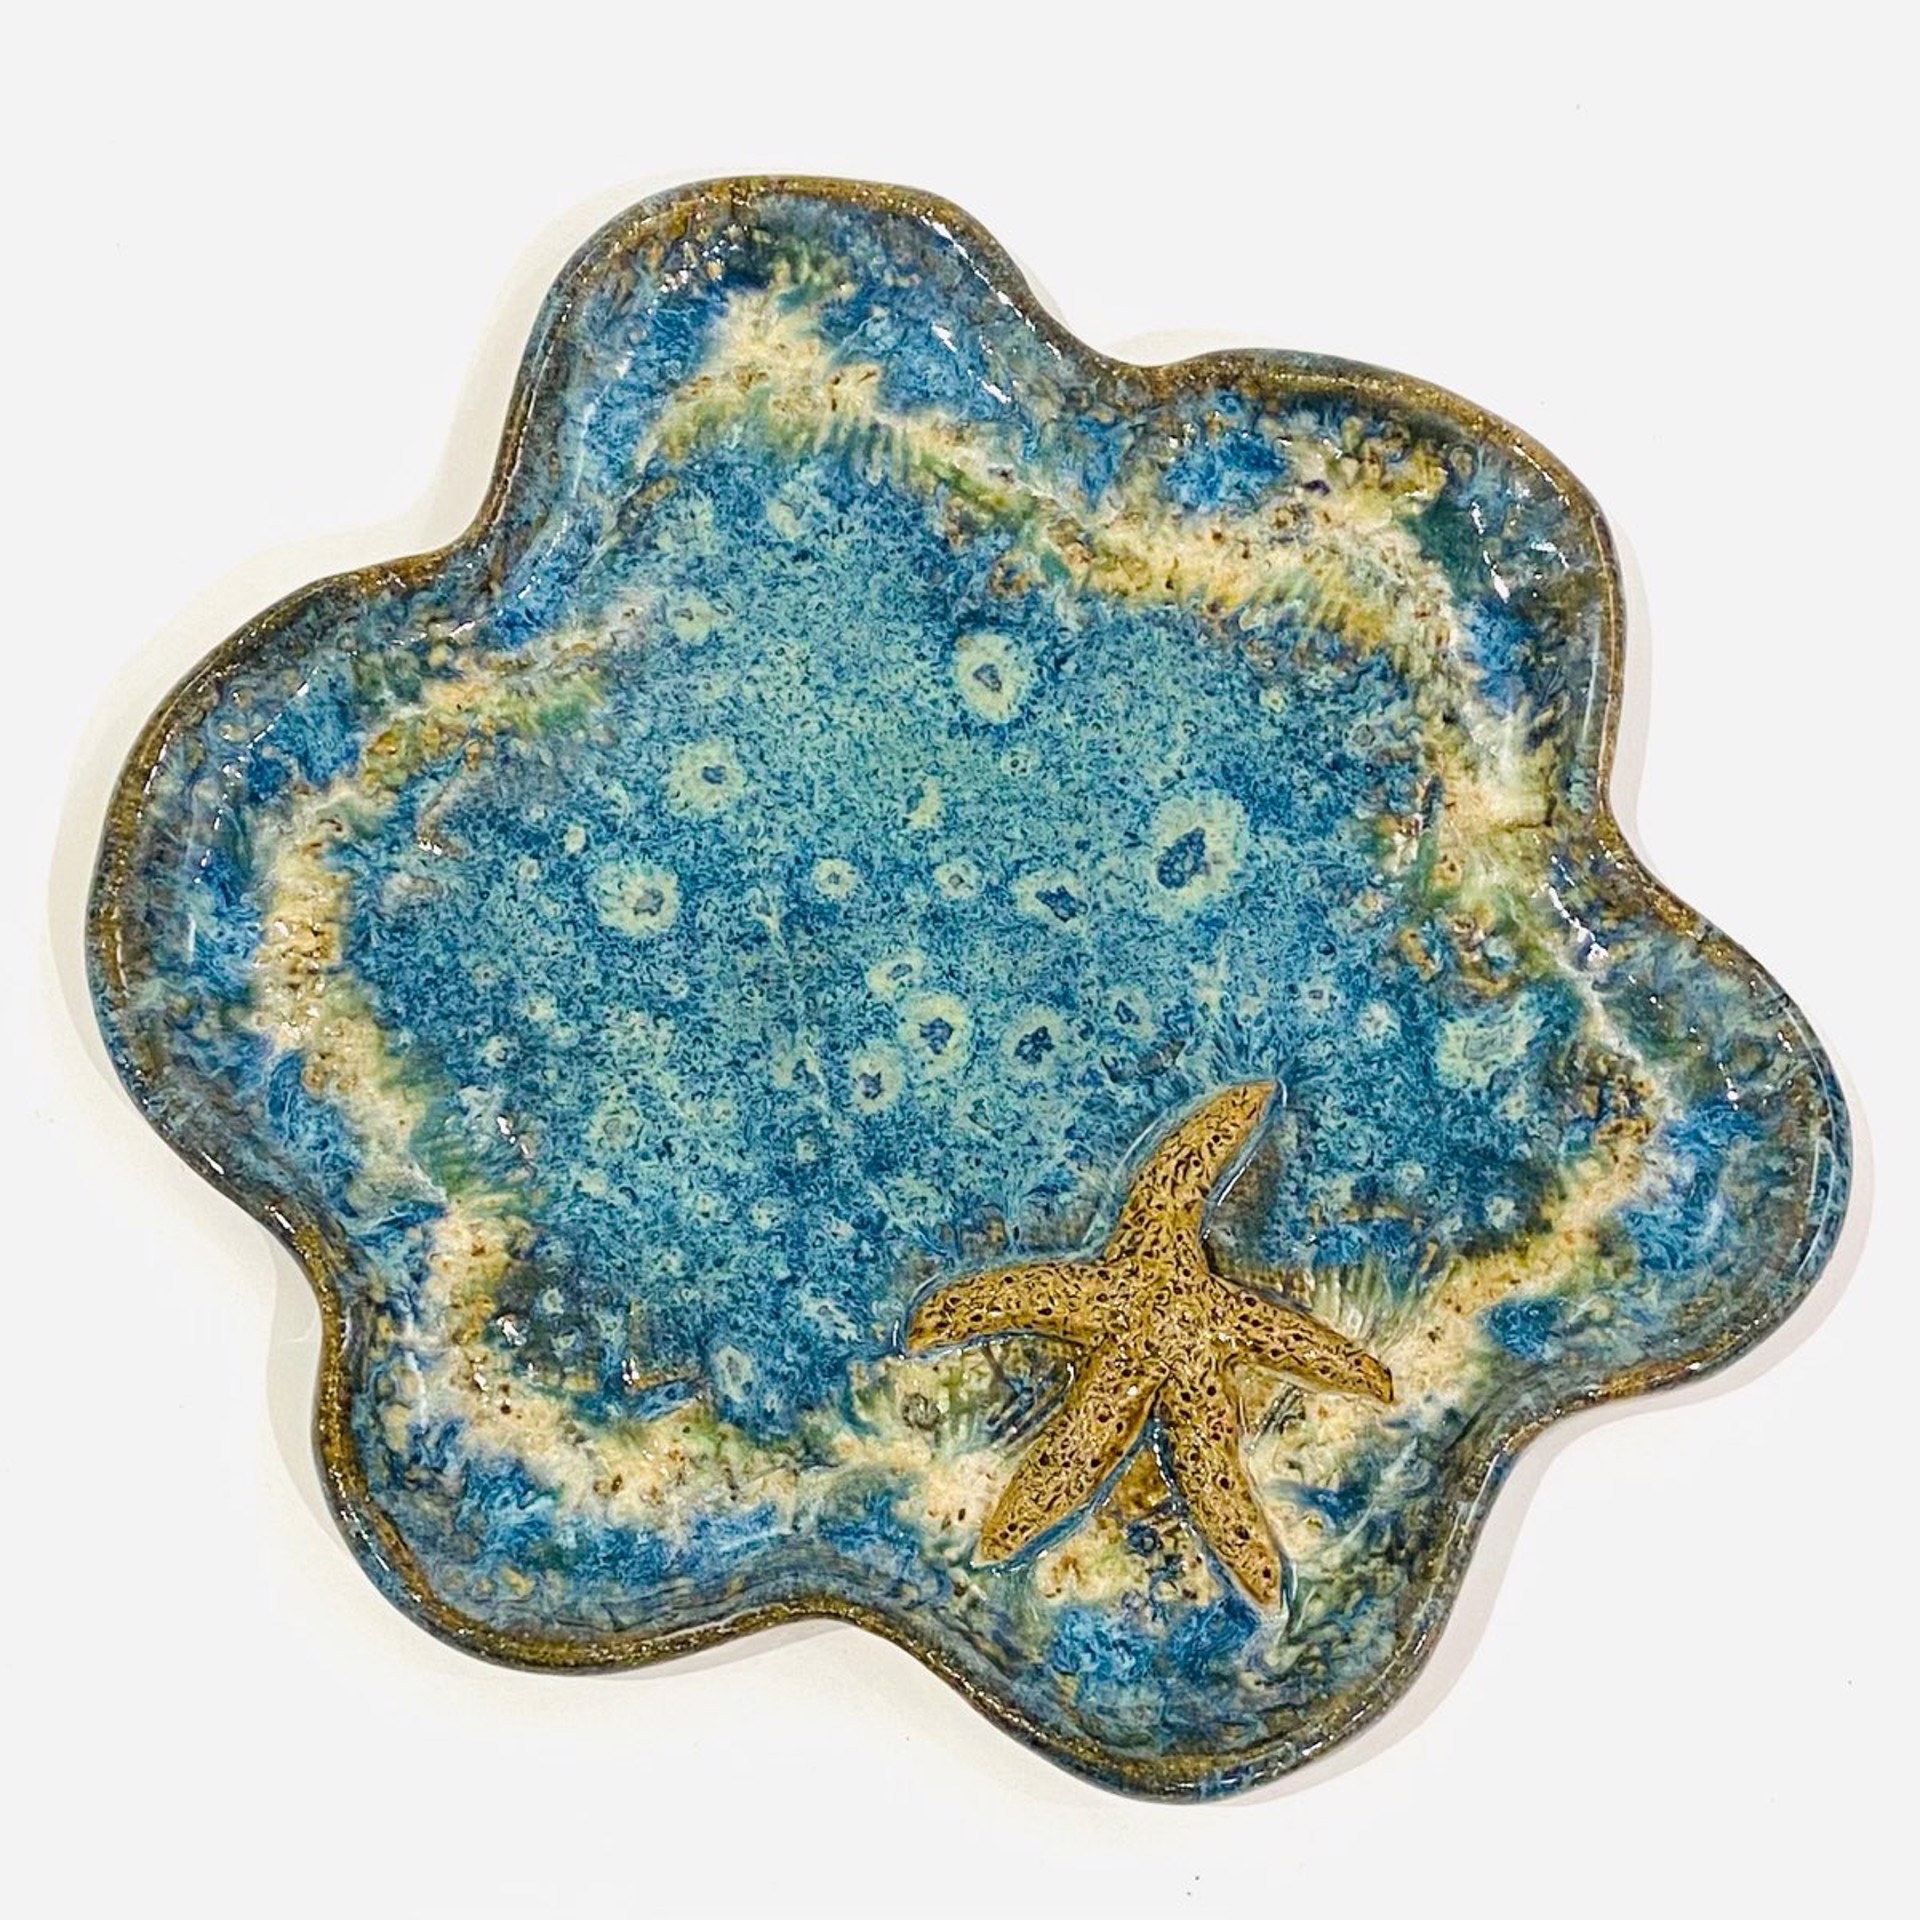 Small Plate with Starfish (Blue Glaze) LG23-915 by Jim & Steffi Logan